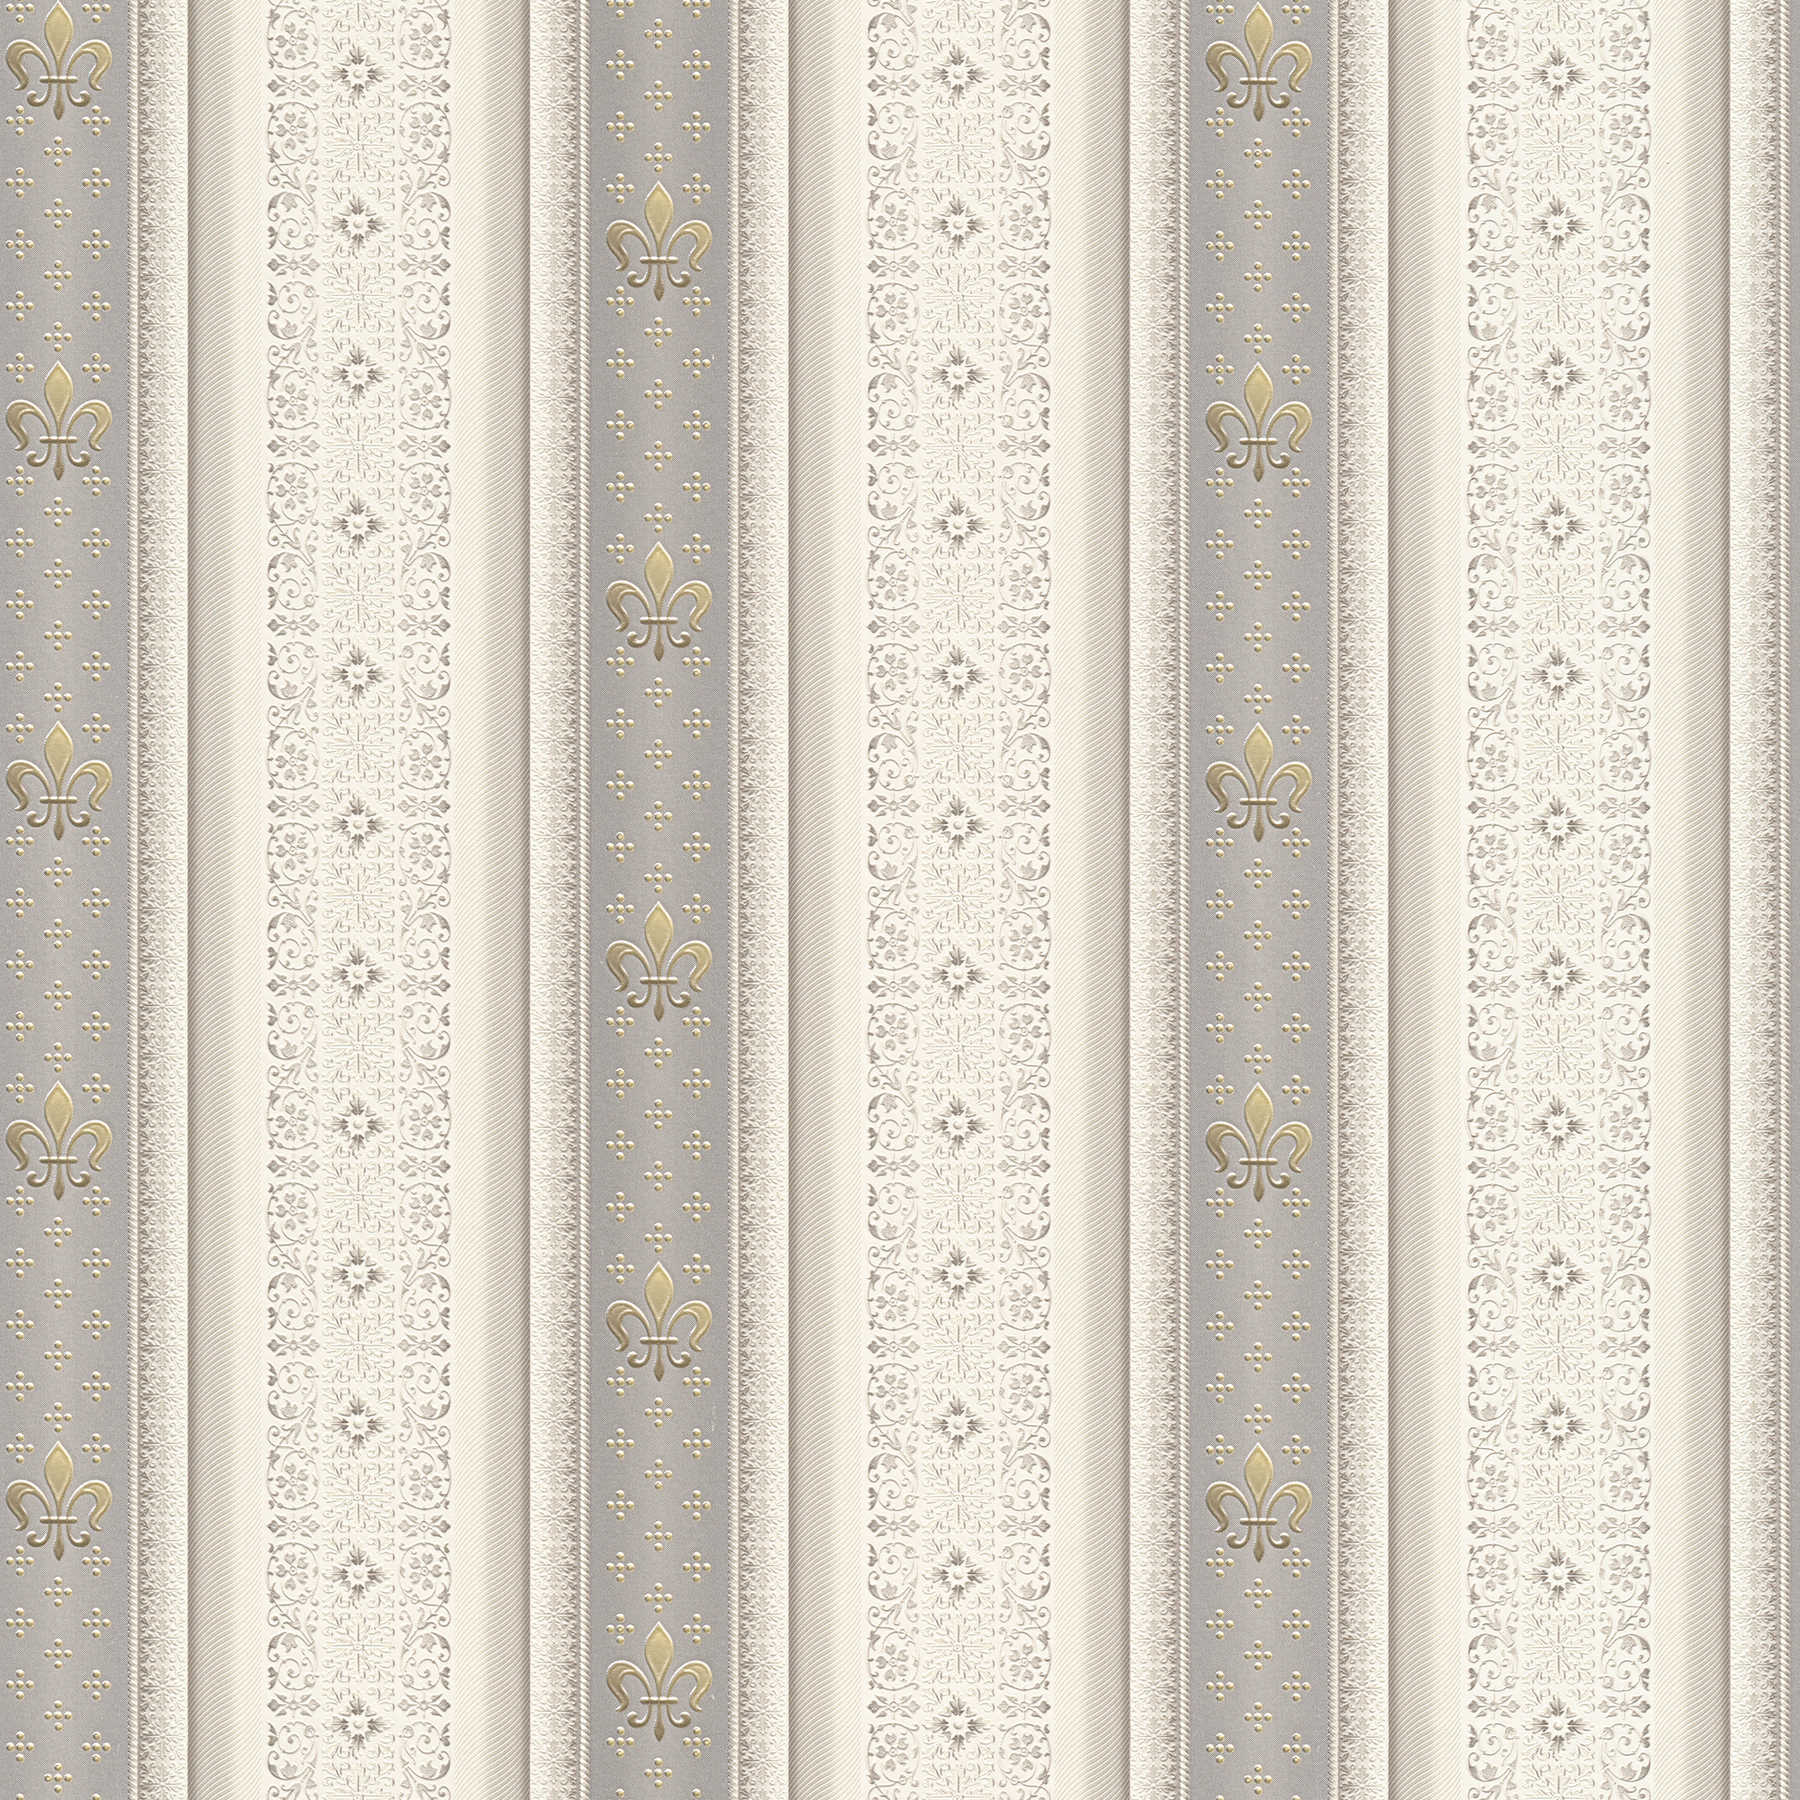         Wallpaper opulent design stripes & ornaments - grey, beige, gold
    